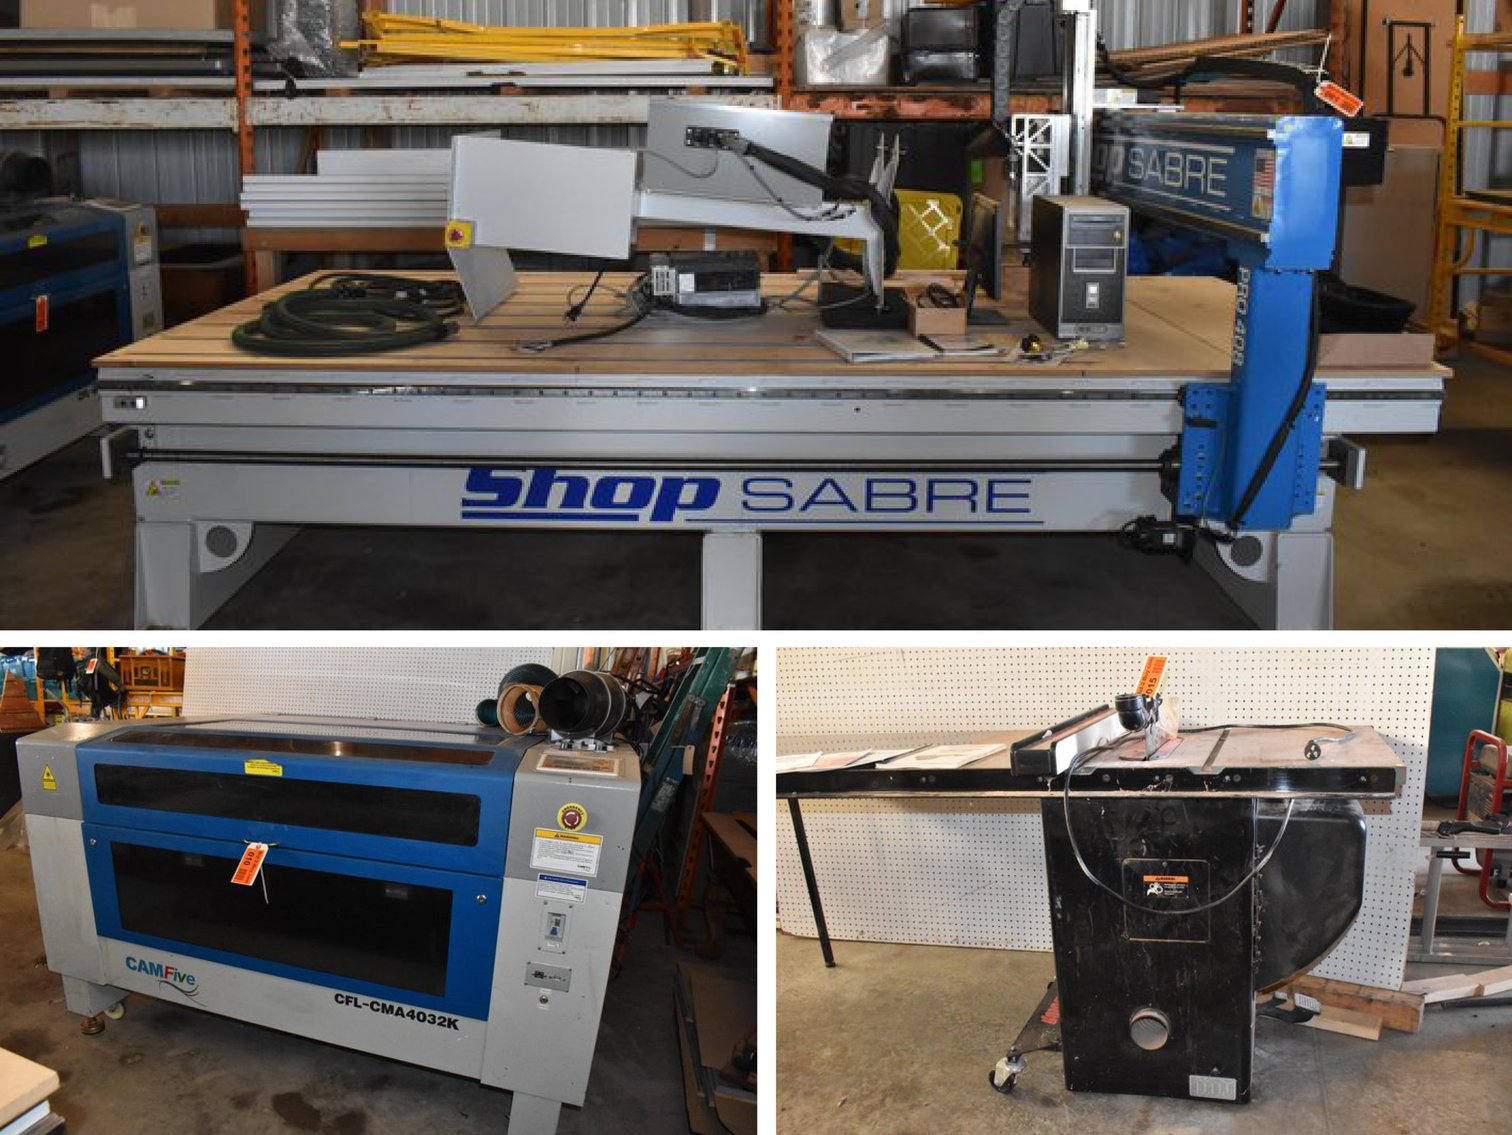 Shop Sabre Pro 408 CNC Router, CAMFive Wood Burner/Laser, Woodworking Equipment, Fish House